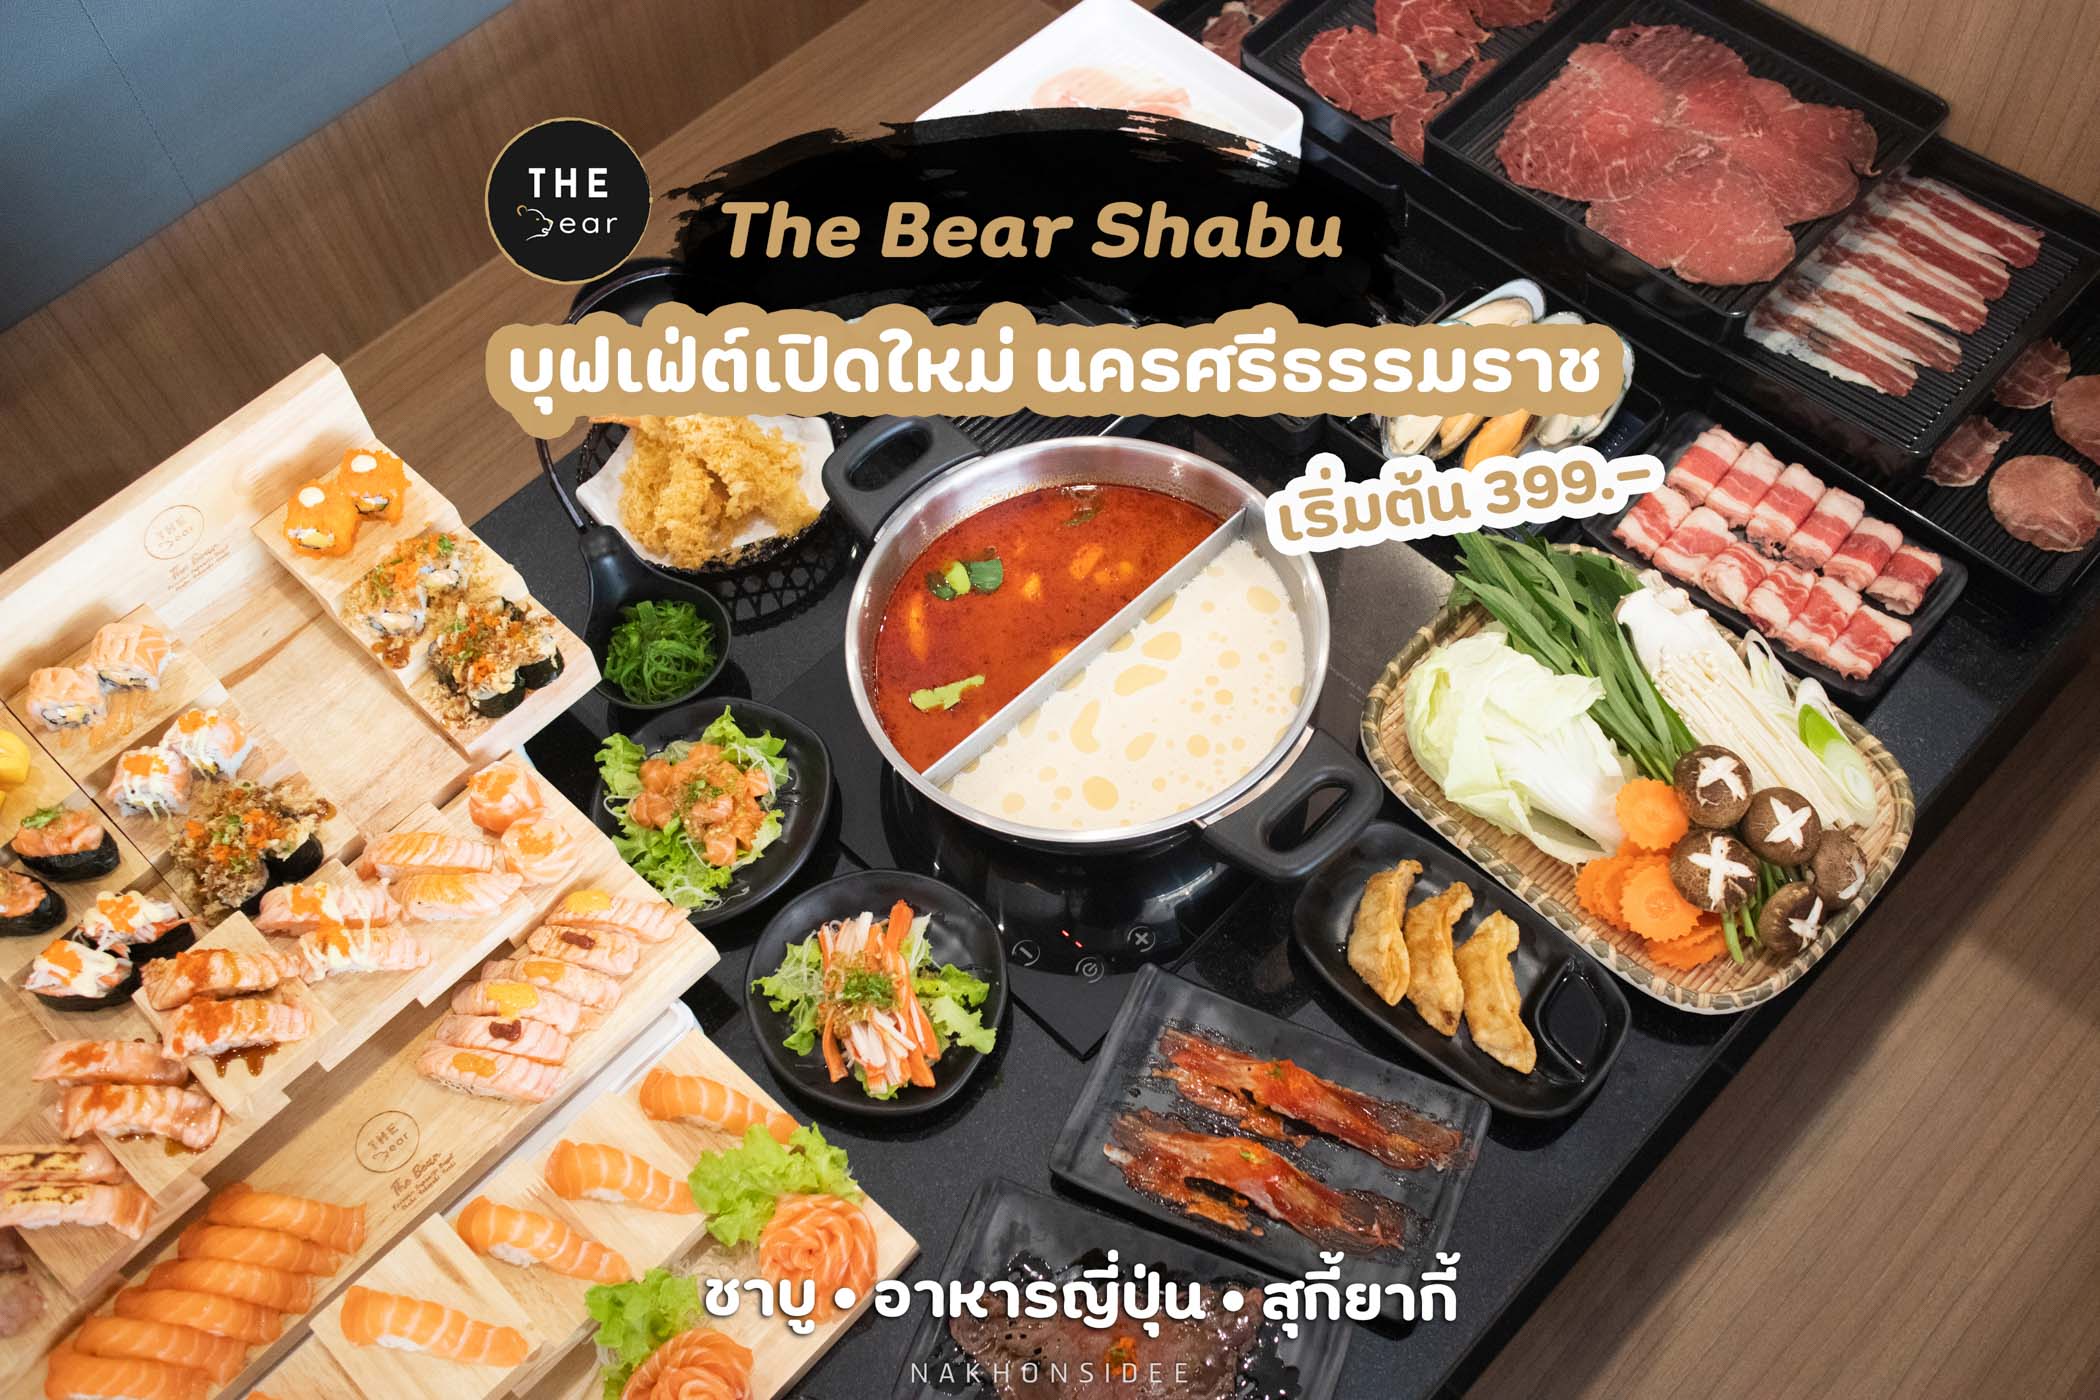 The Bear Shabu Sukiyaki นครศรีธรรมราช มีทั้งชาบู สุกี้ยากี้ บุฟเฟ่ต์อาหารญี่ปุ่น วัตถุดิบสดใหม่ น้ำจิ้มอร่อย 